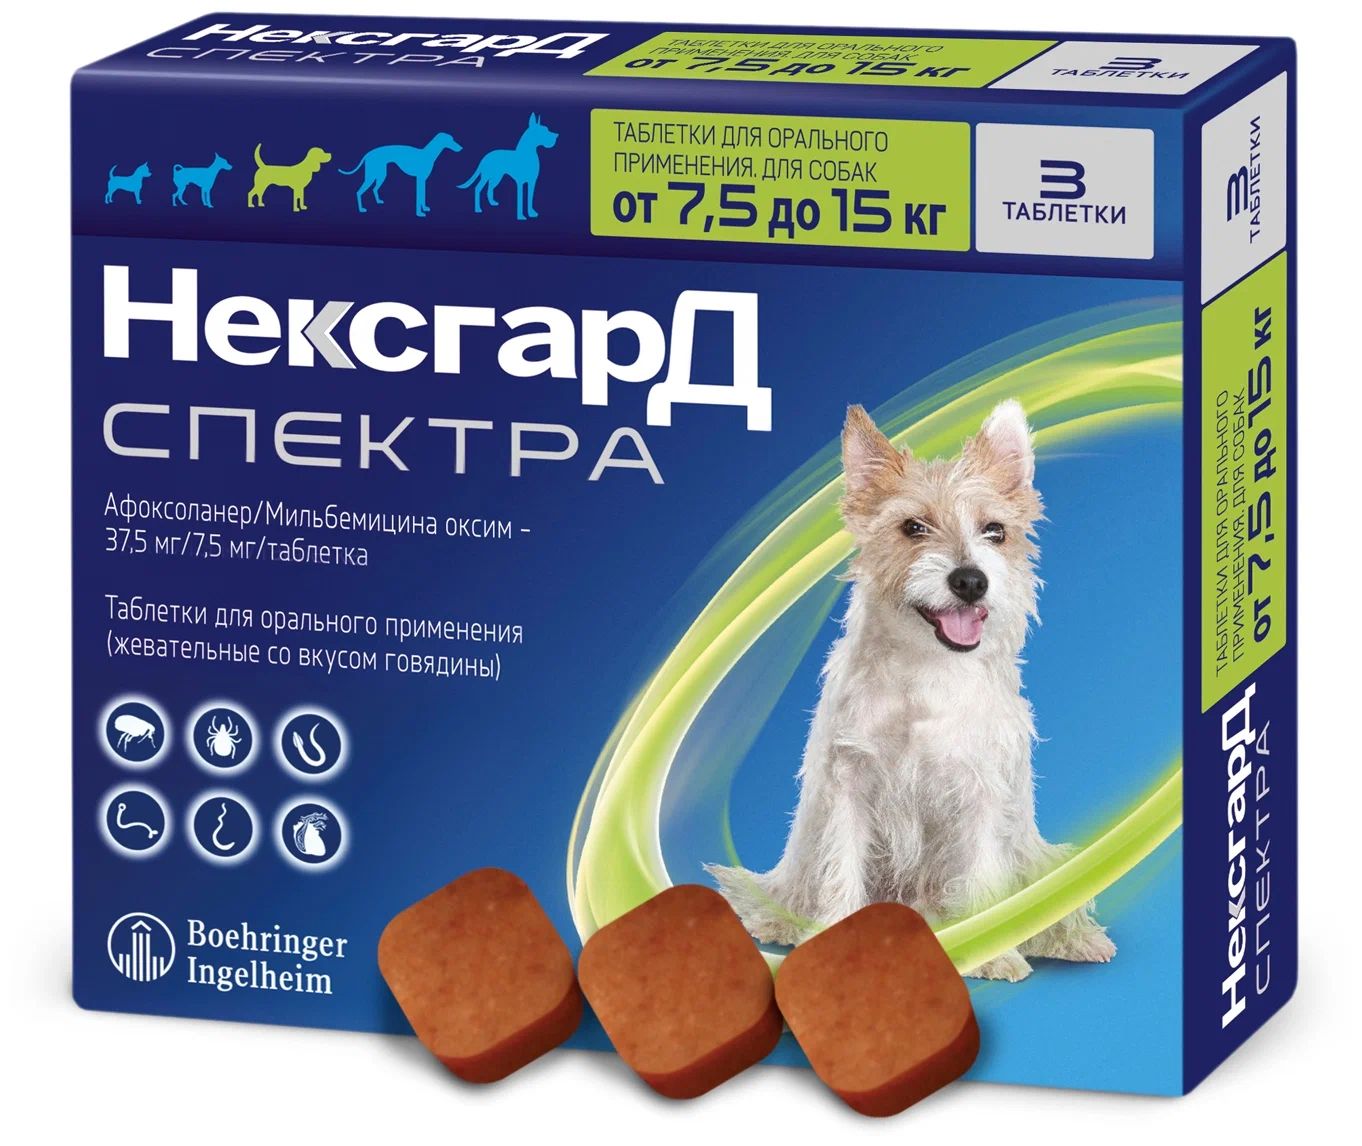 Таблетки против клещей для собак. НЕКСГАРД спектра для собак 7.5-15 кг. НЕКСГАРД для собак. Нетсгард спектра для собак. Фронтлайн НЕКСГАРД спектра для собак.